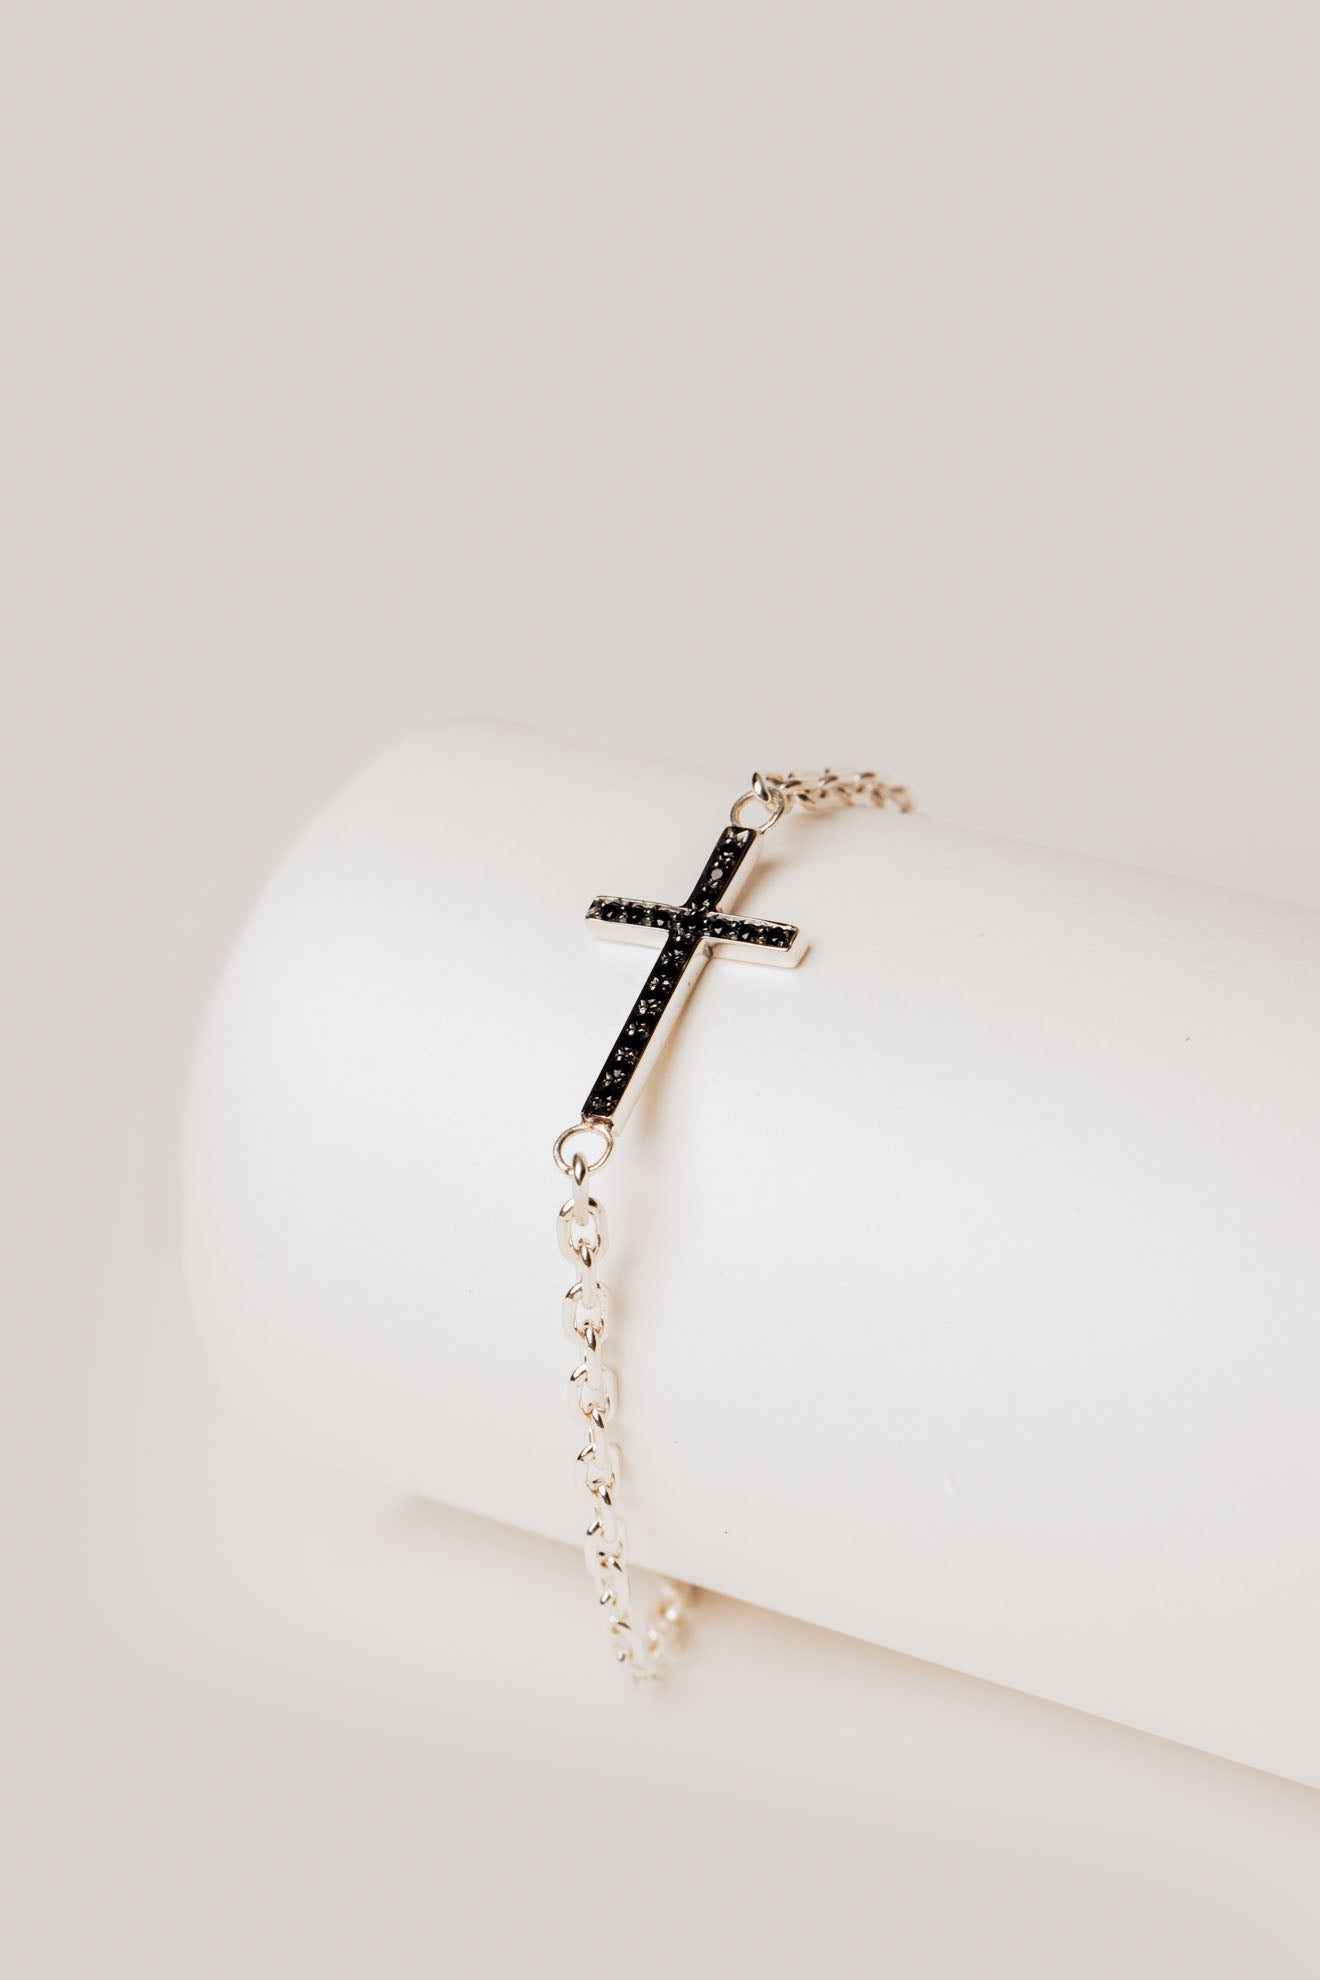 Pulseira cruz preta masculina em prata 925 banhada 